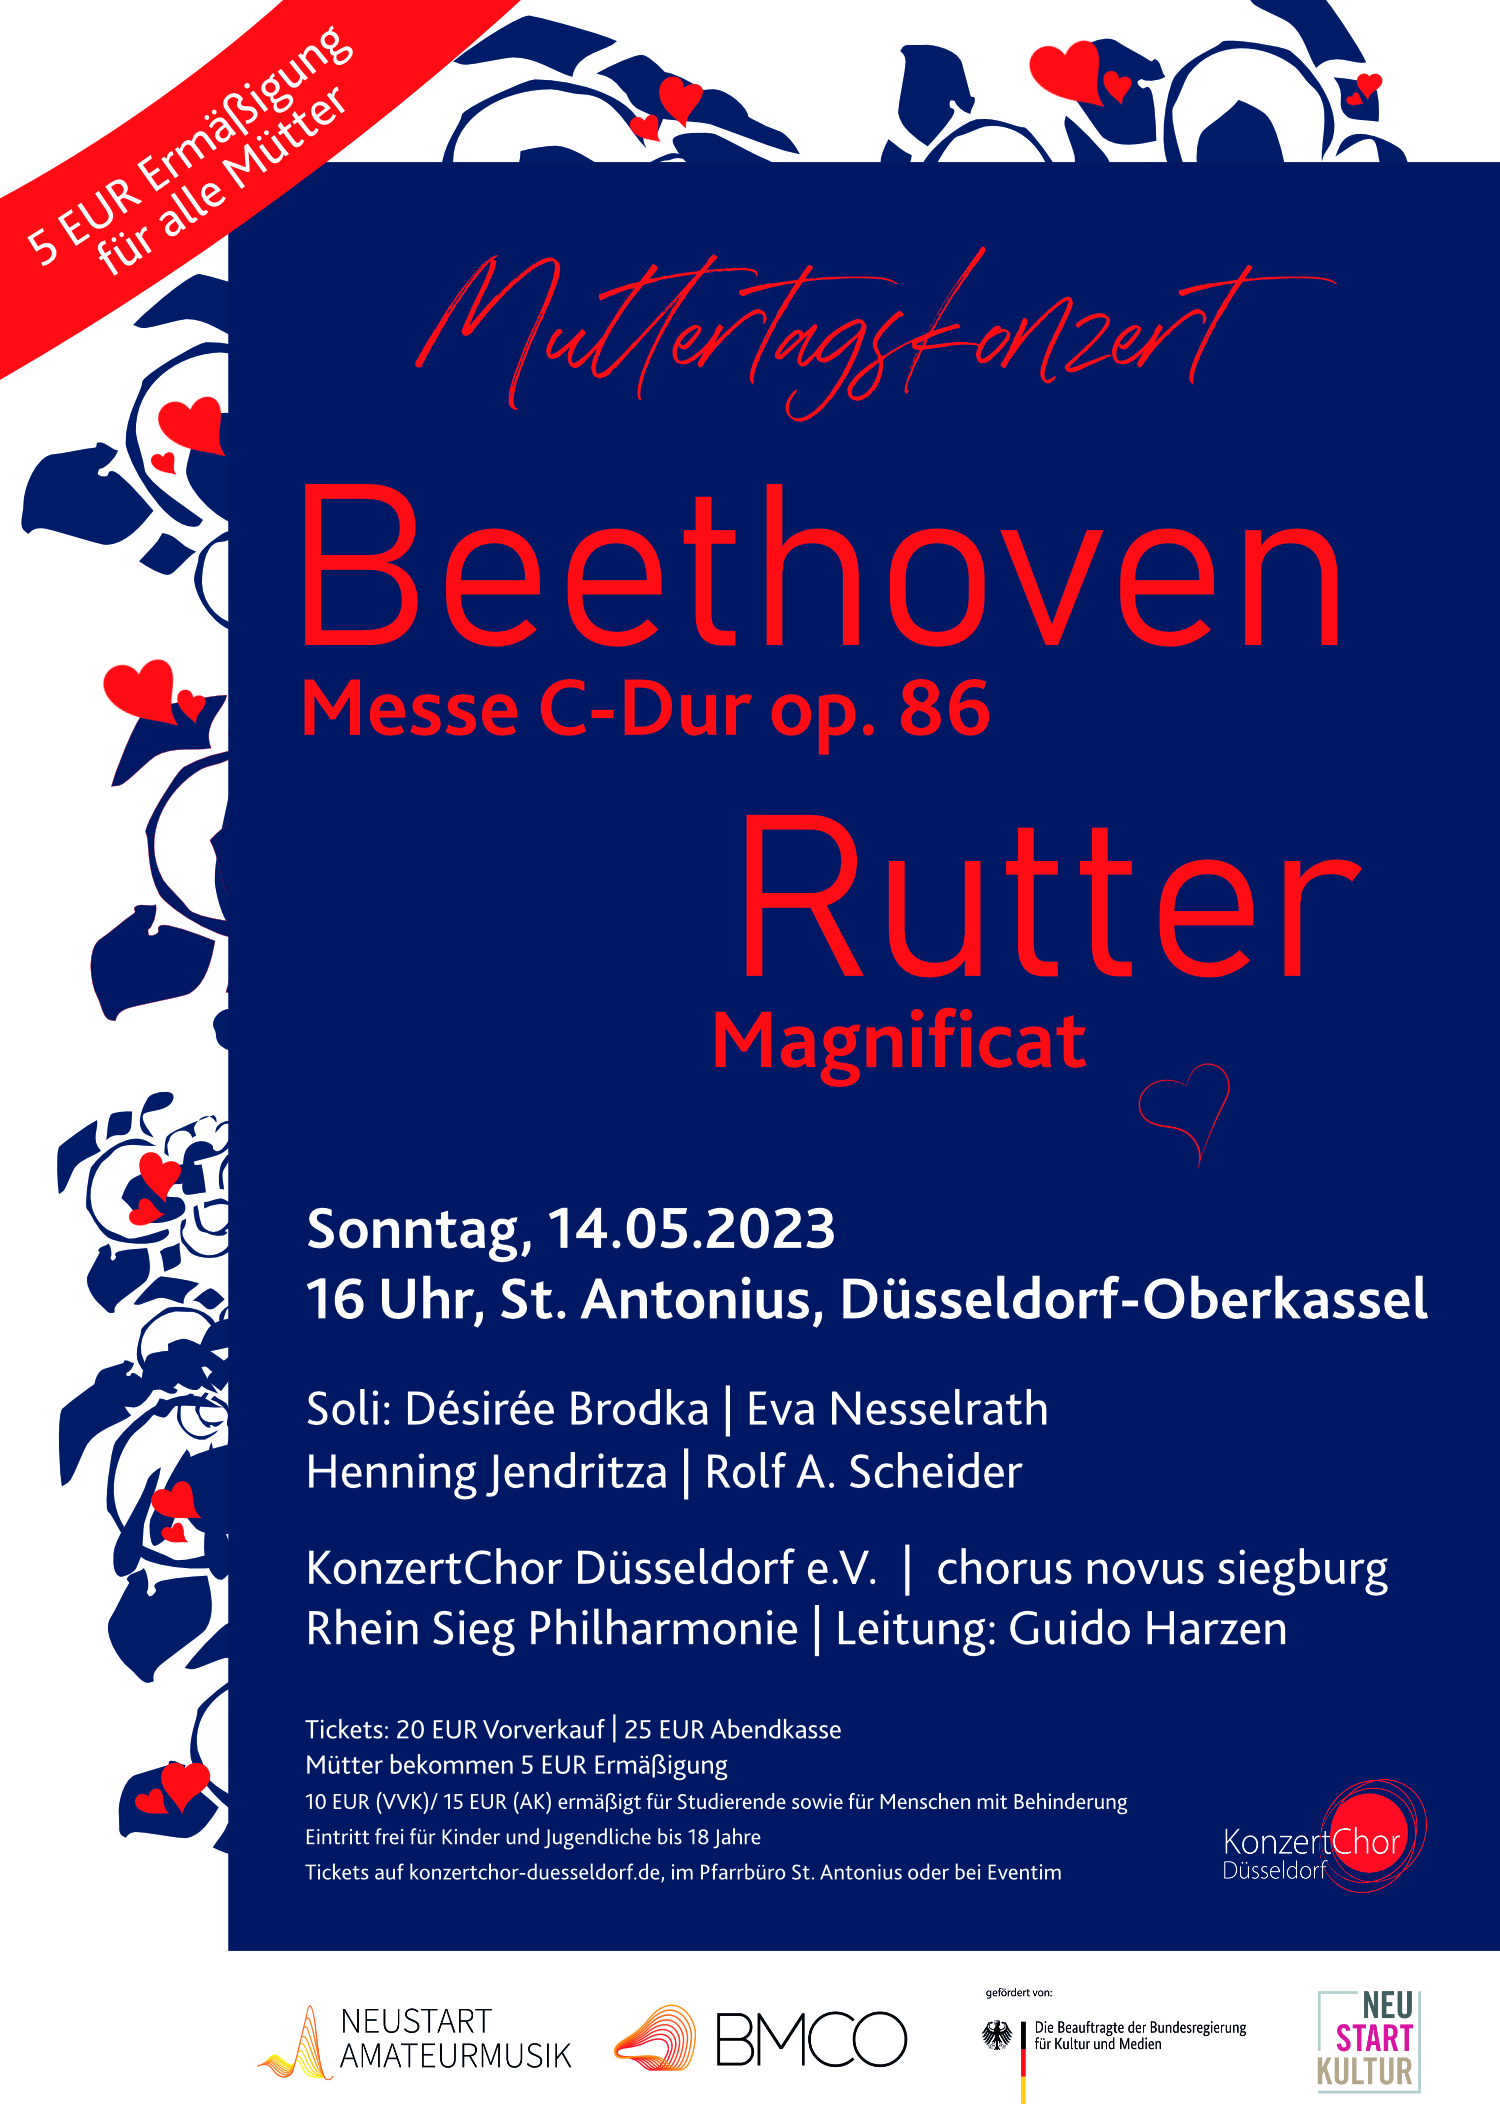 Beethoven Rutter am Muttertag 2023 